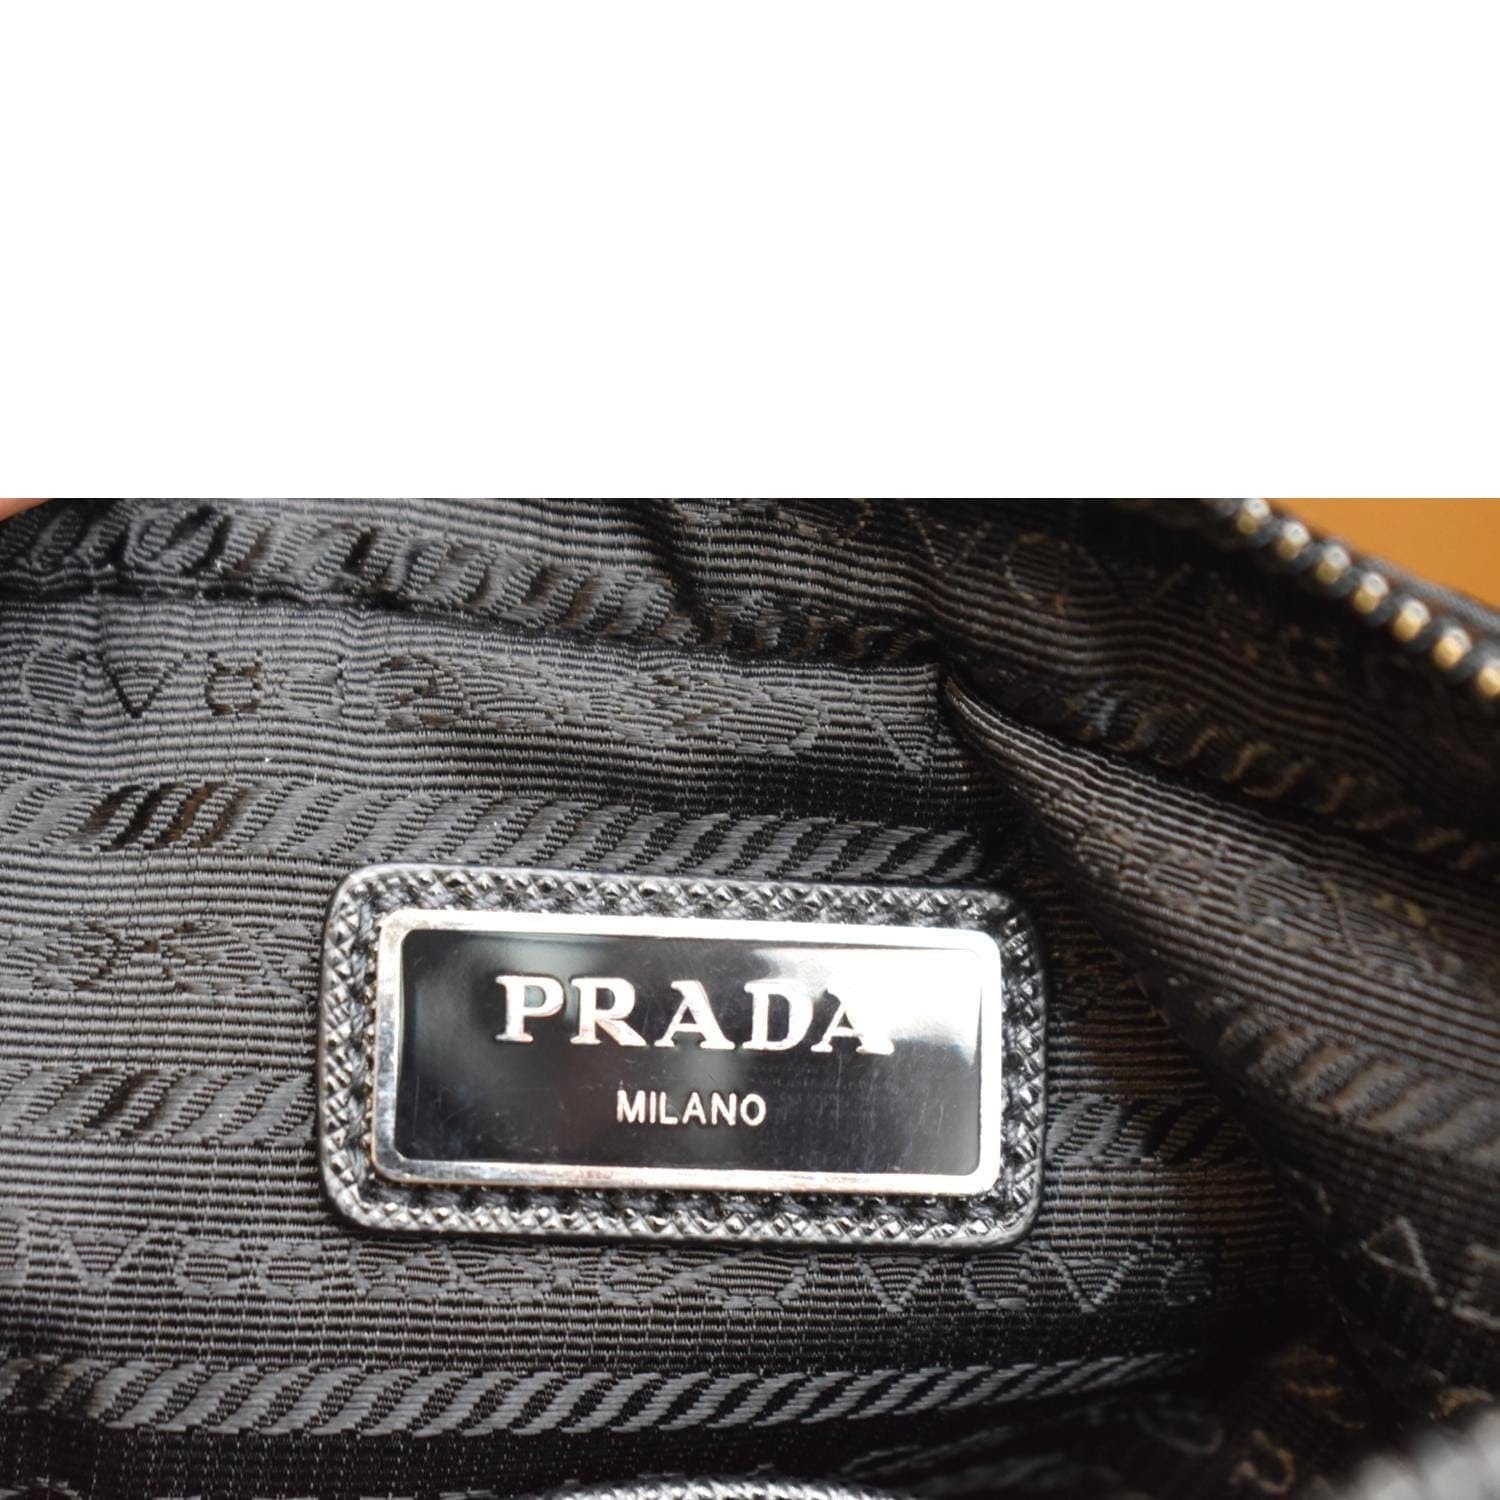 prada bag black